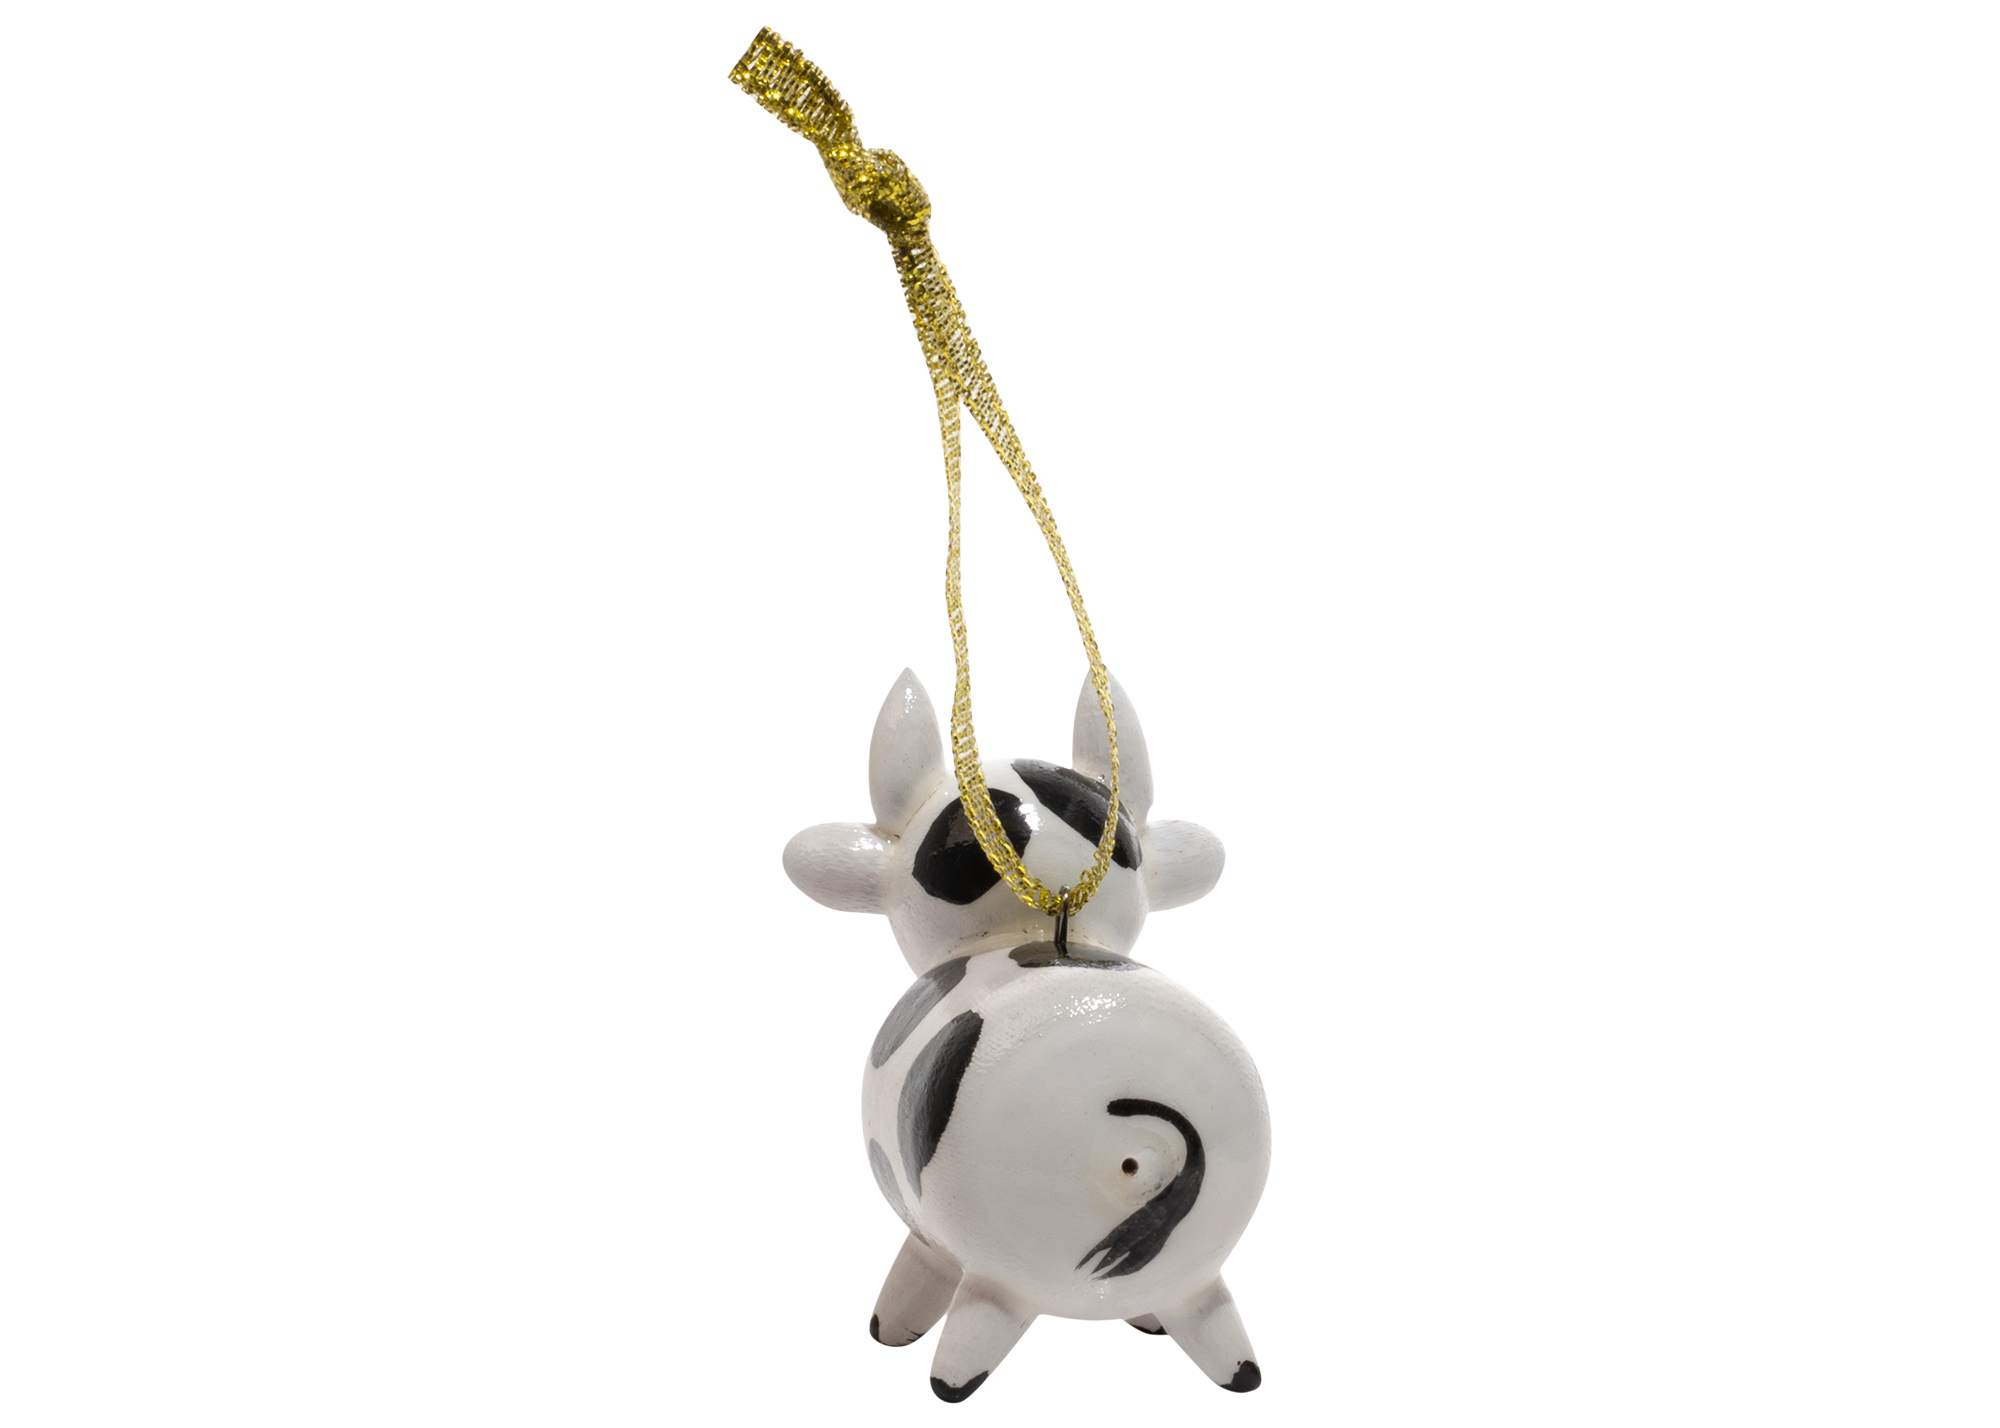 Buy Holstein Cow Ornament  2" at GoldenCockerel.com